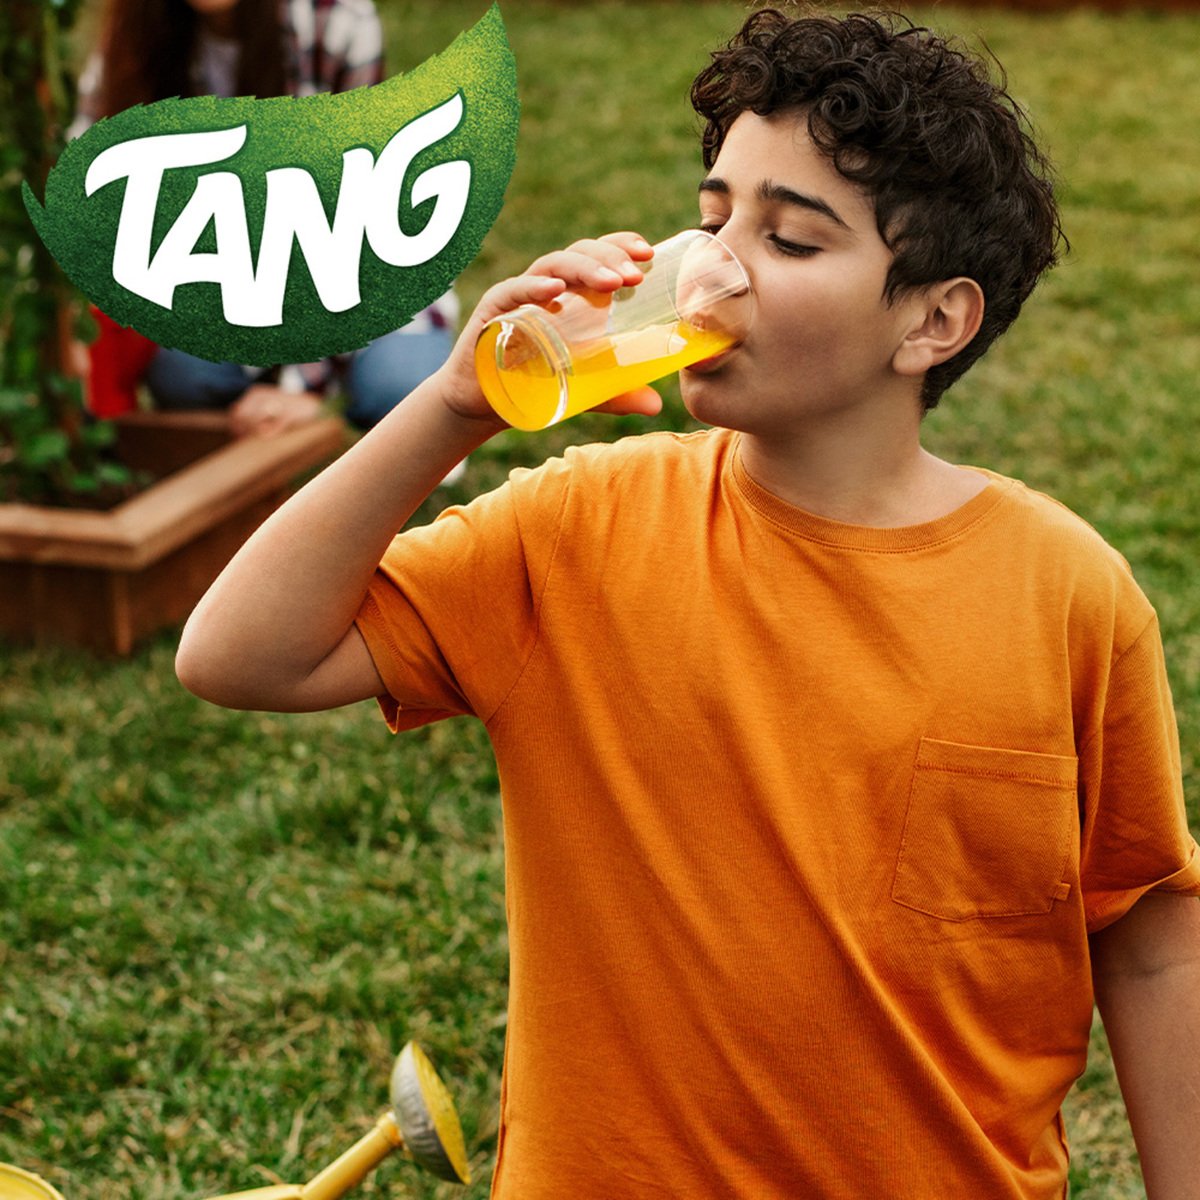 Buy Tang Orange Flavoured Powder Drink 375g Pouch, Makes 3L Online - Shop  Beverages on Carrefour Saudi Arabia